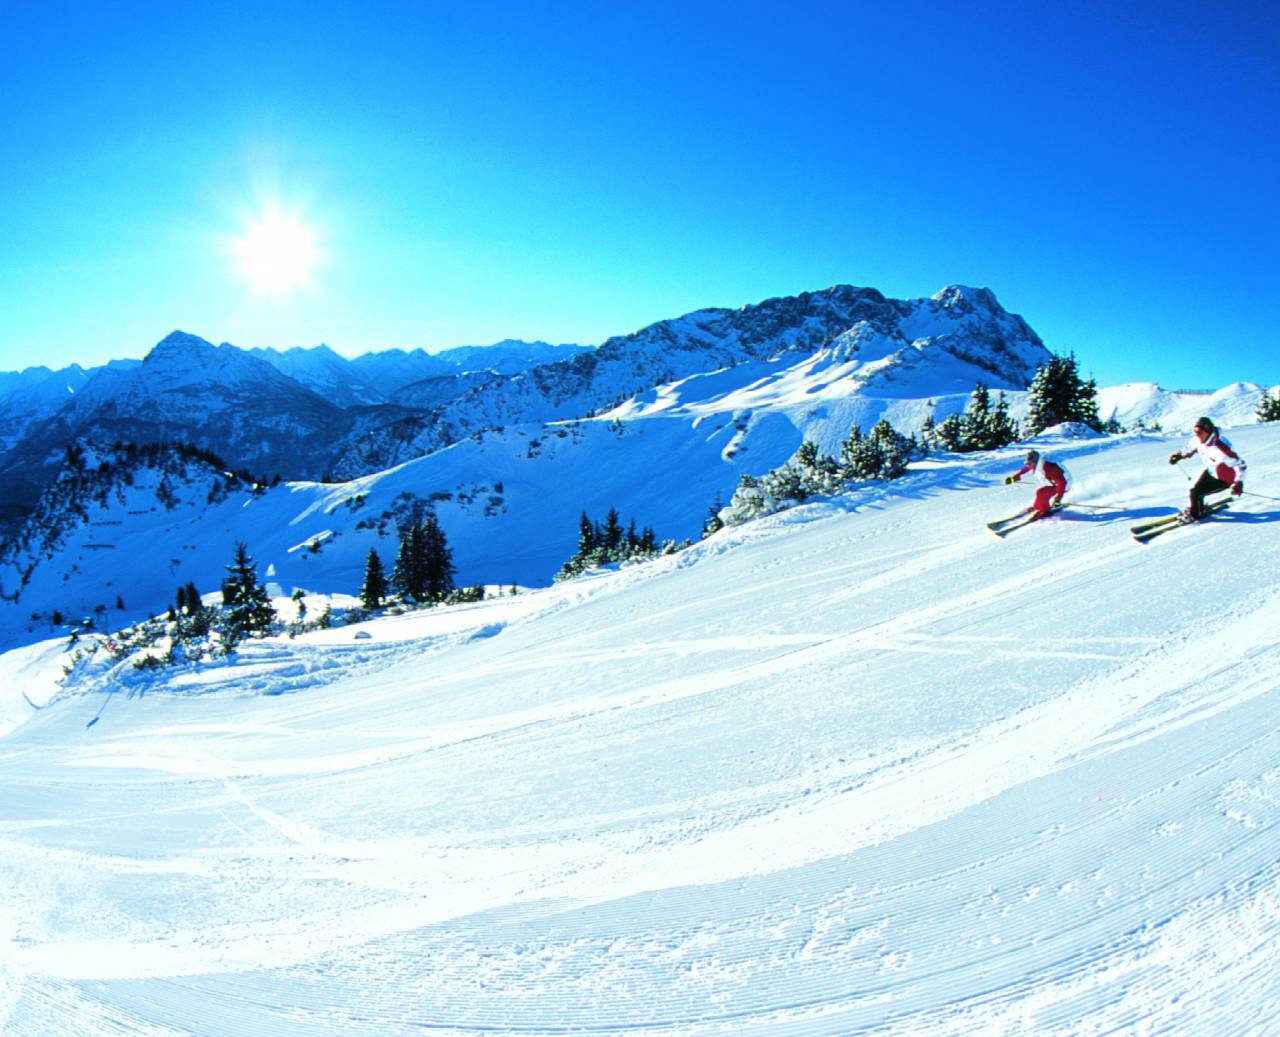 Skiers on a freshly groomed ski slope in the morning sunshine